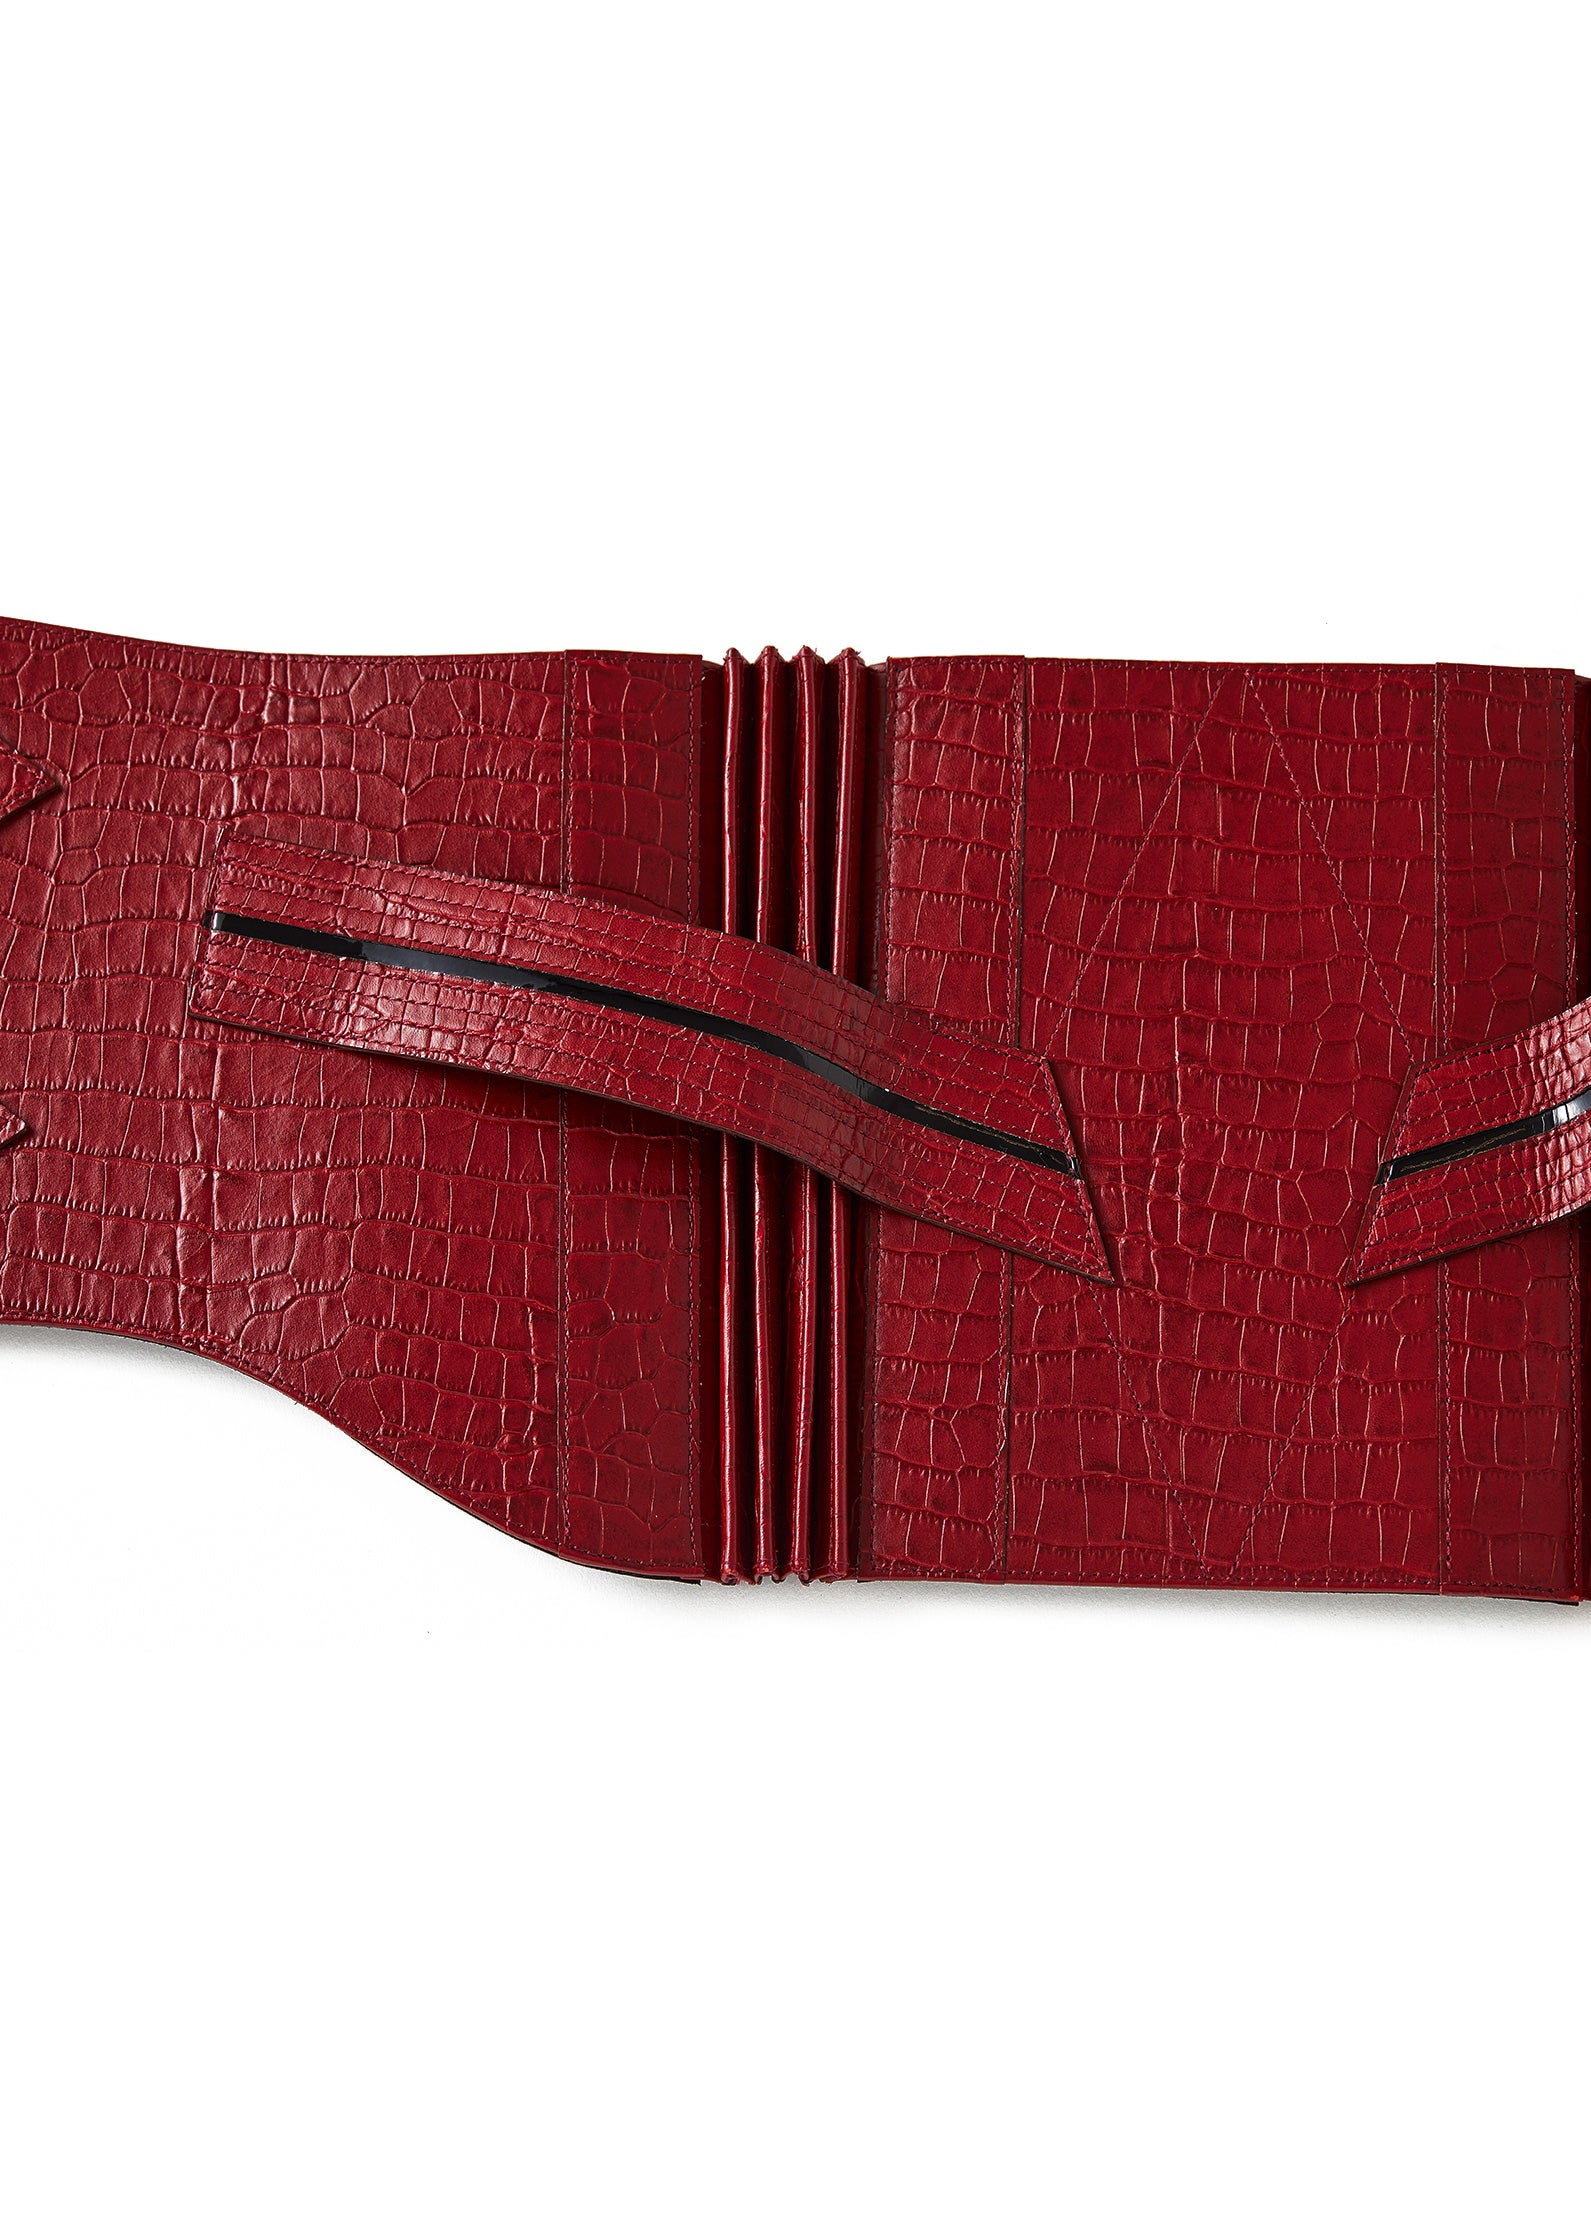 Obi Belt Leather "Croc Red"